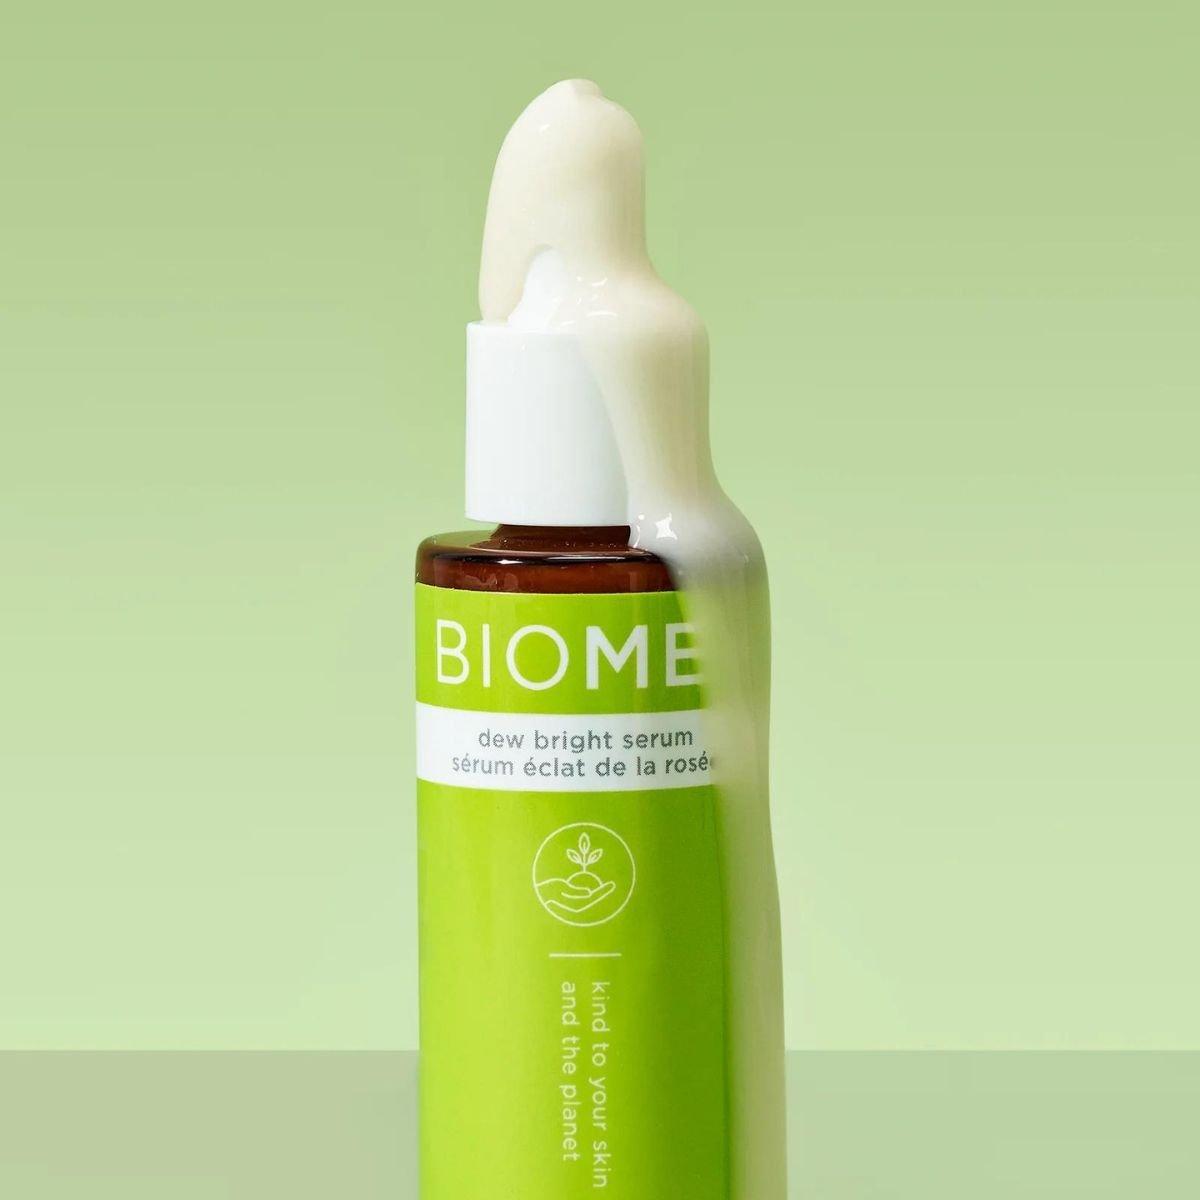 Image Skincare | BIOME+ Dew Bright Serum | 30ml - DG International Ventures Limited